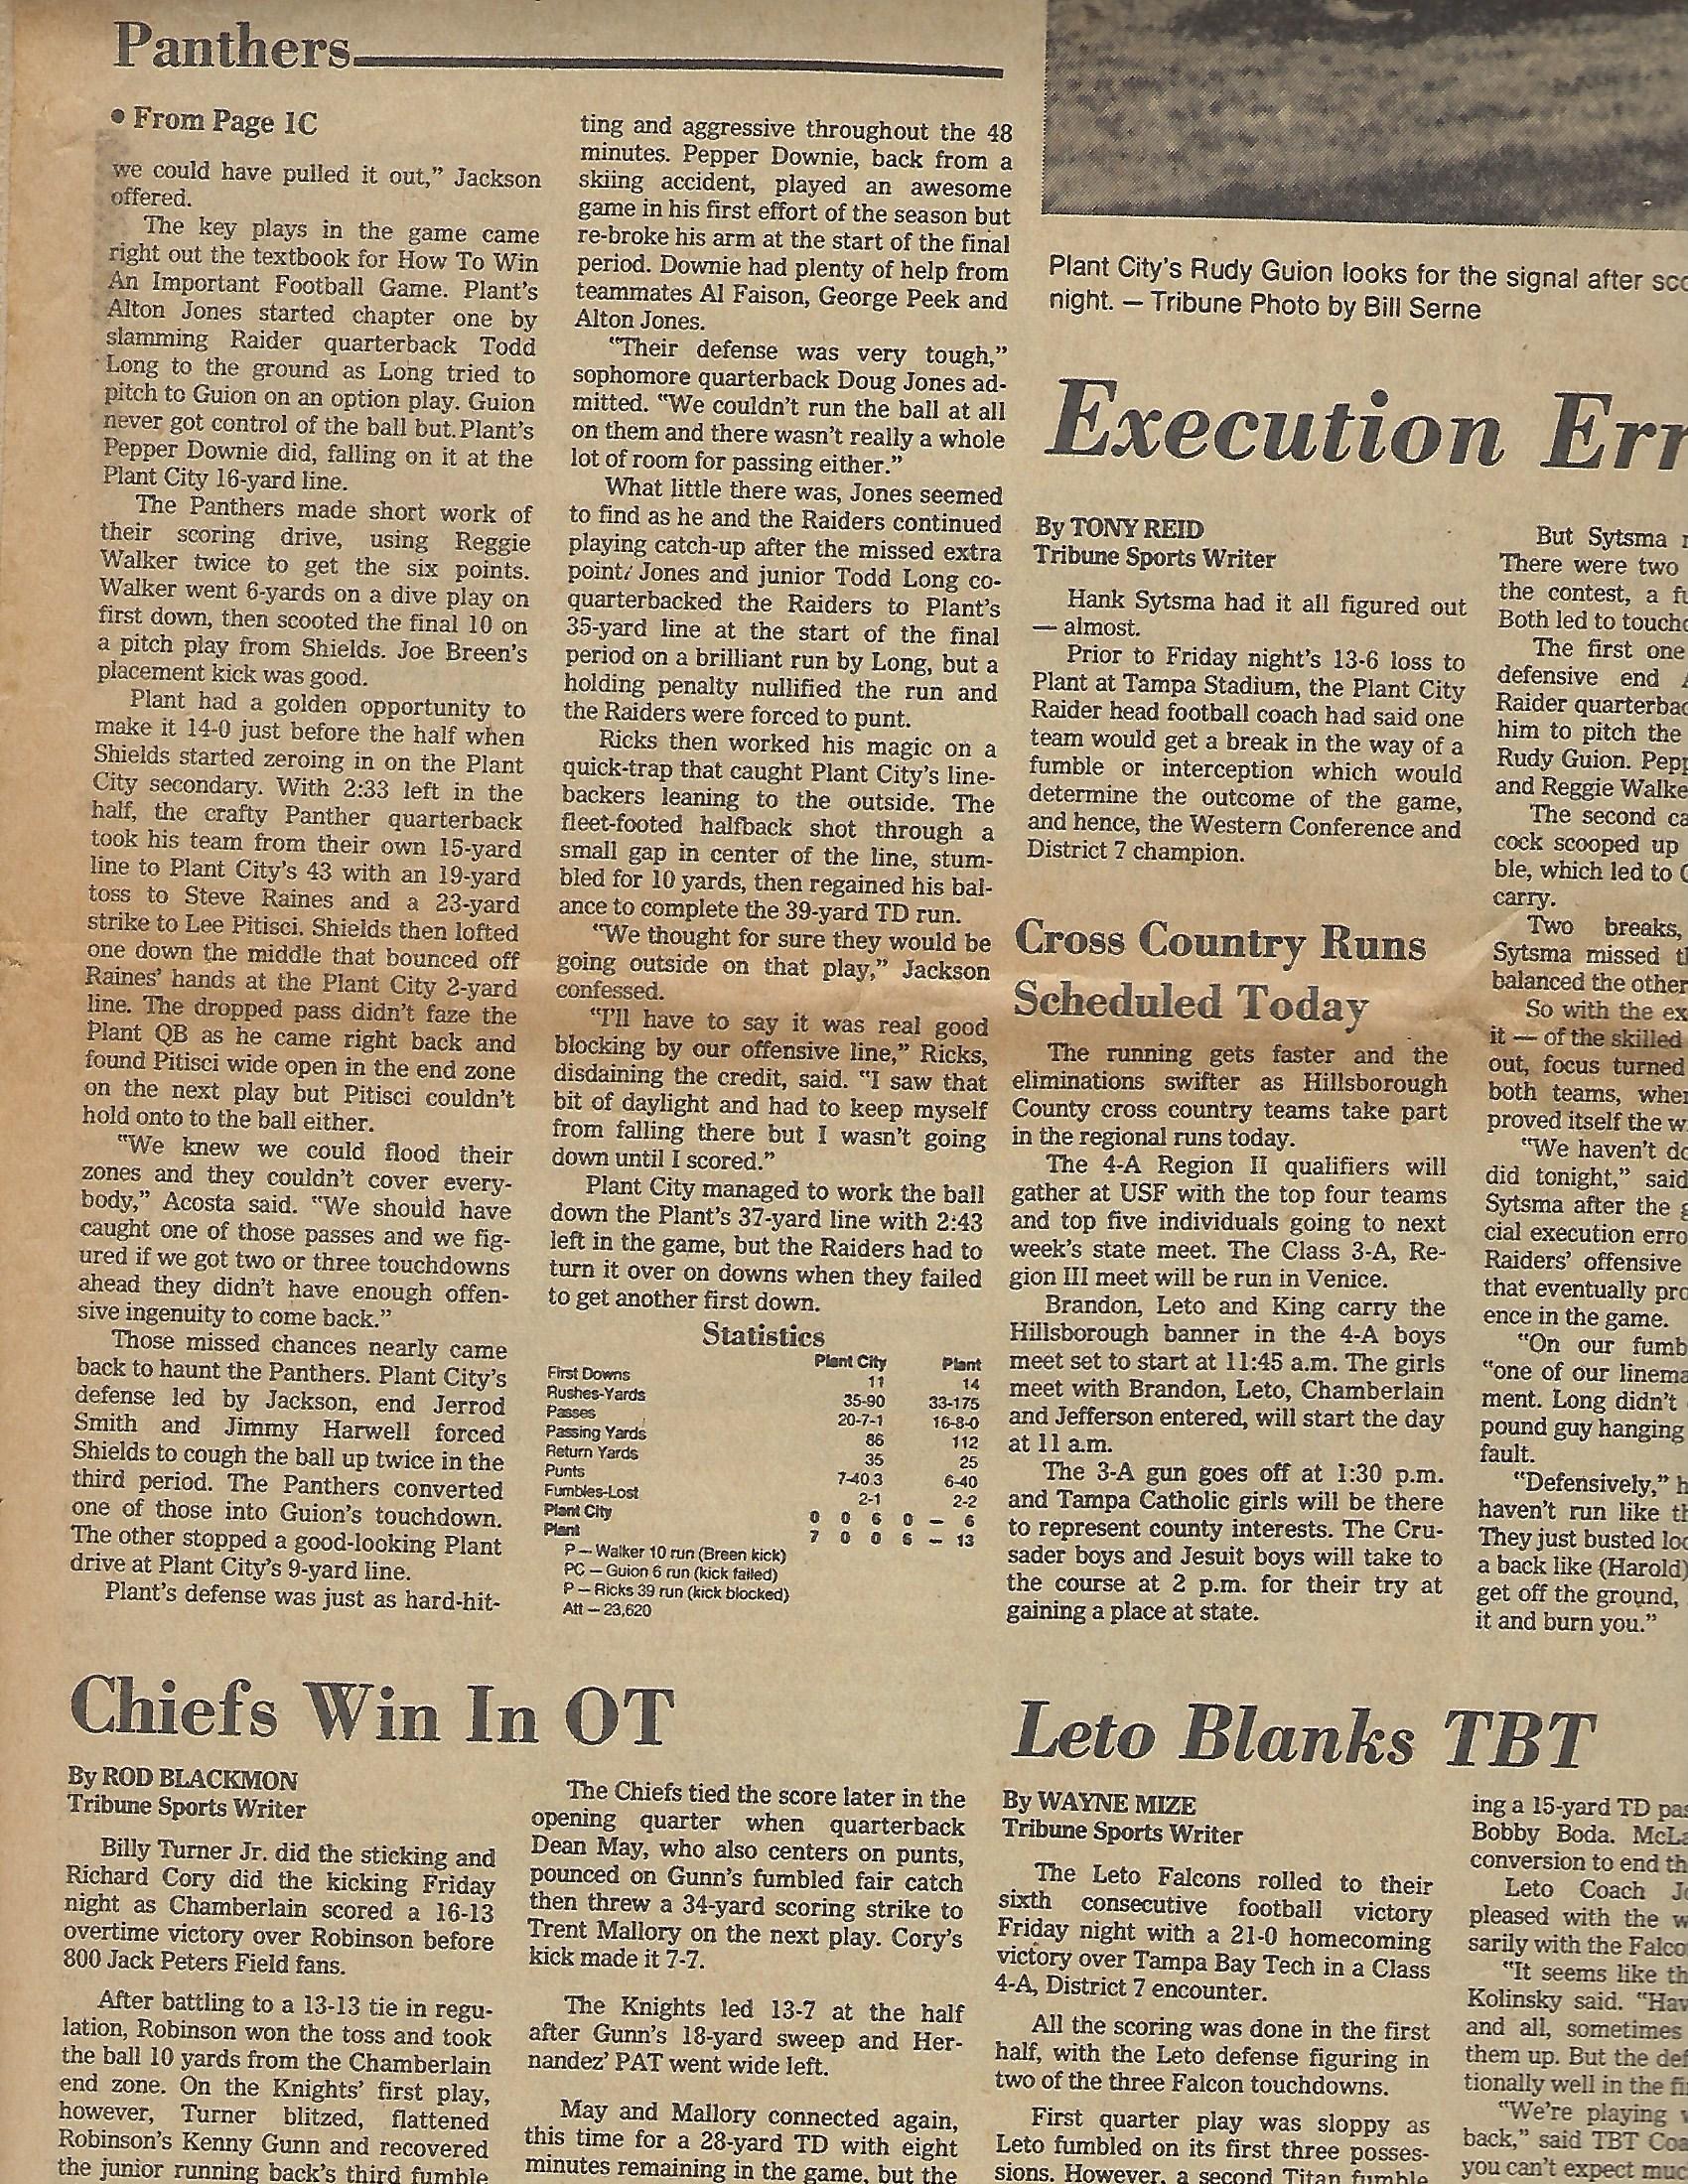 November 10, 1979 Page 3.jpg